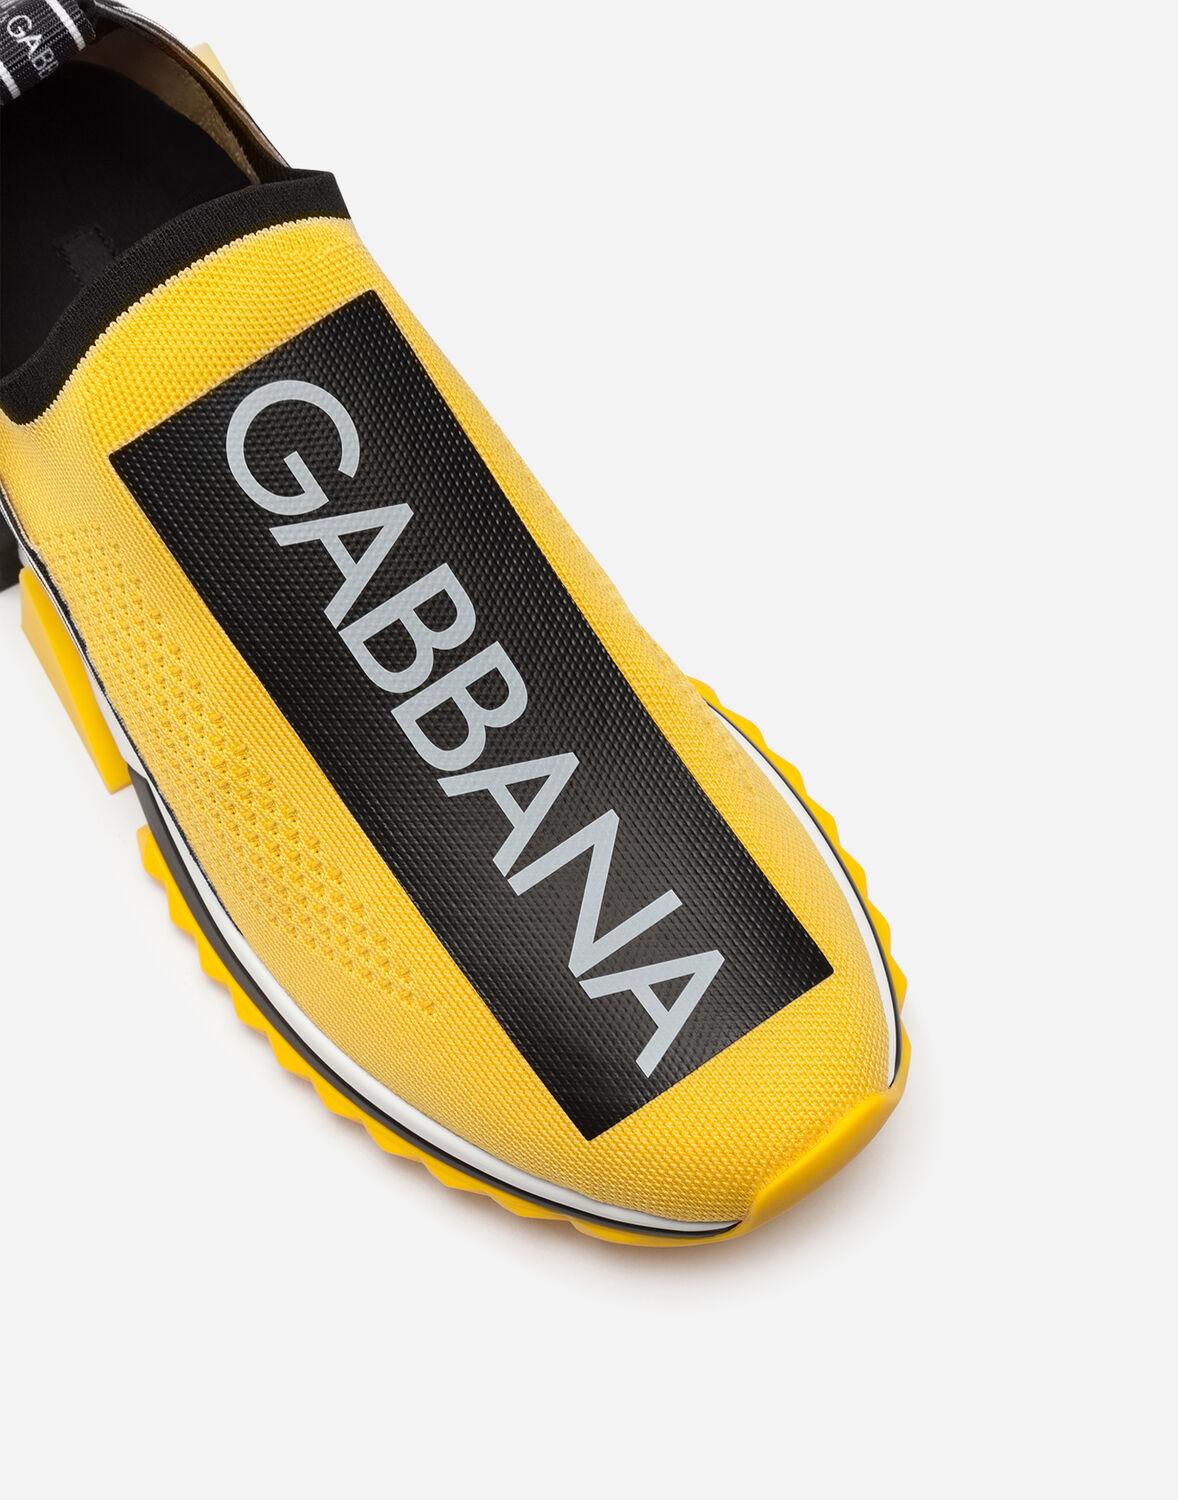 yellow dolce gabbana sneakers